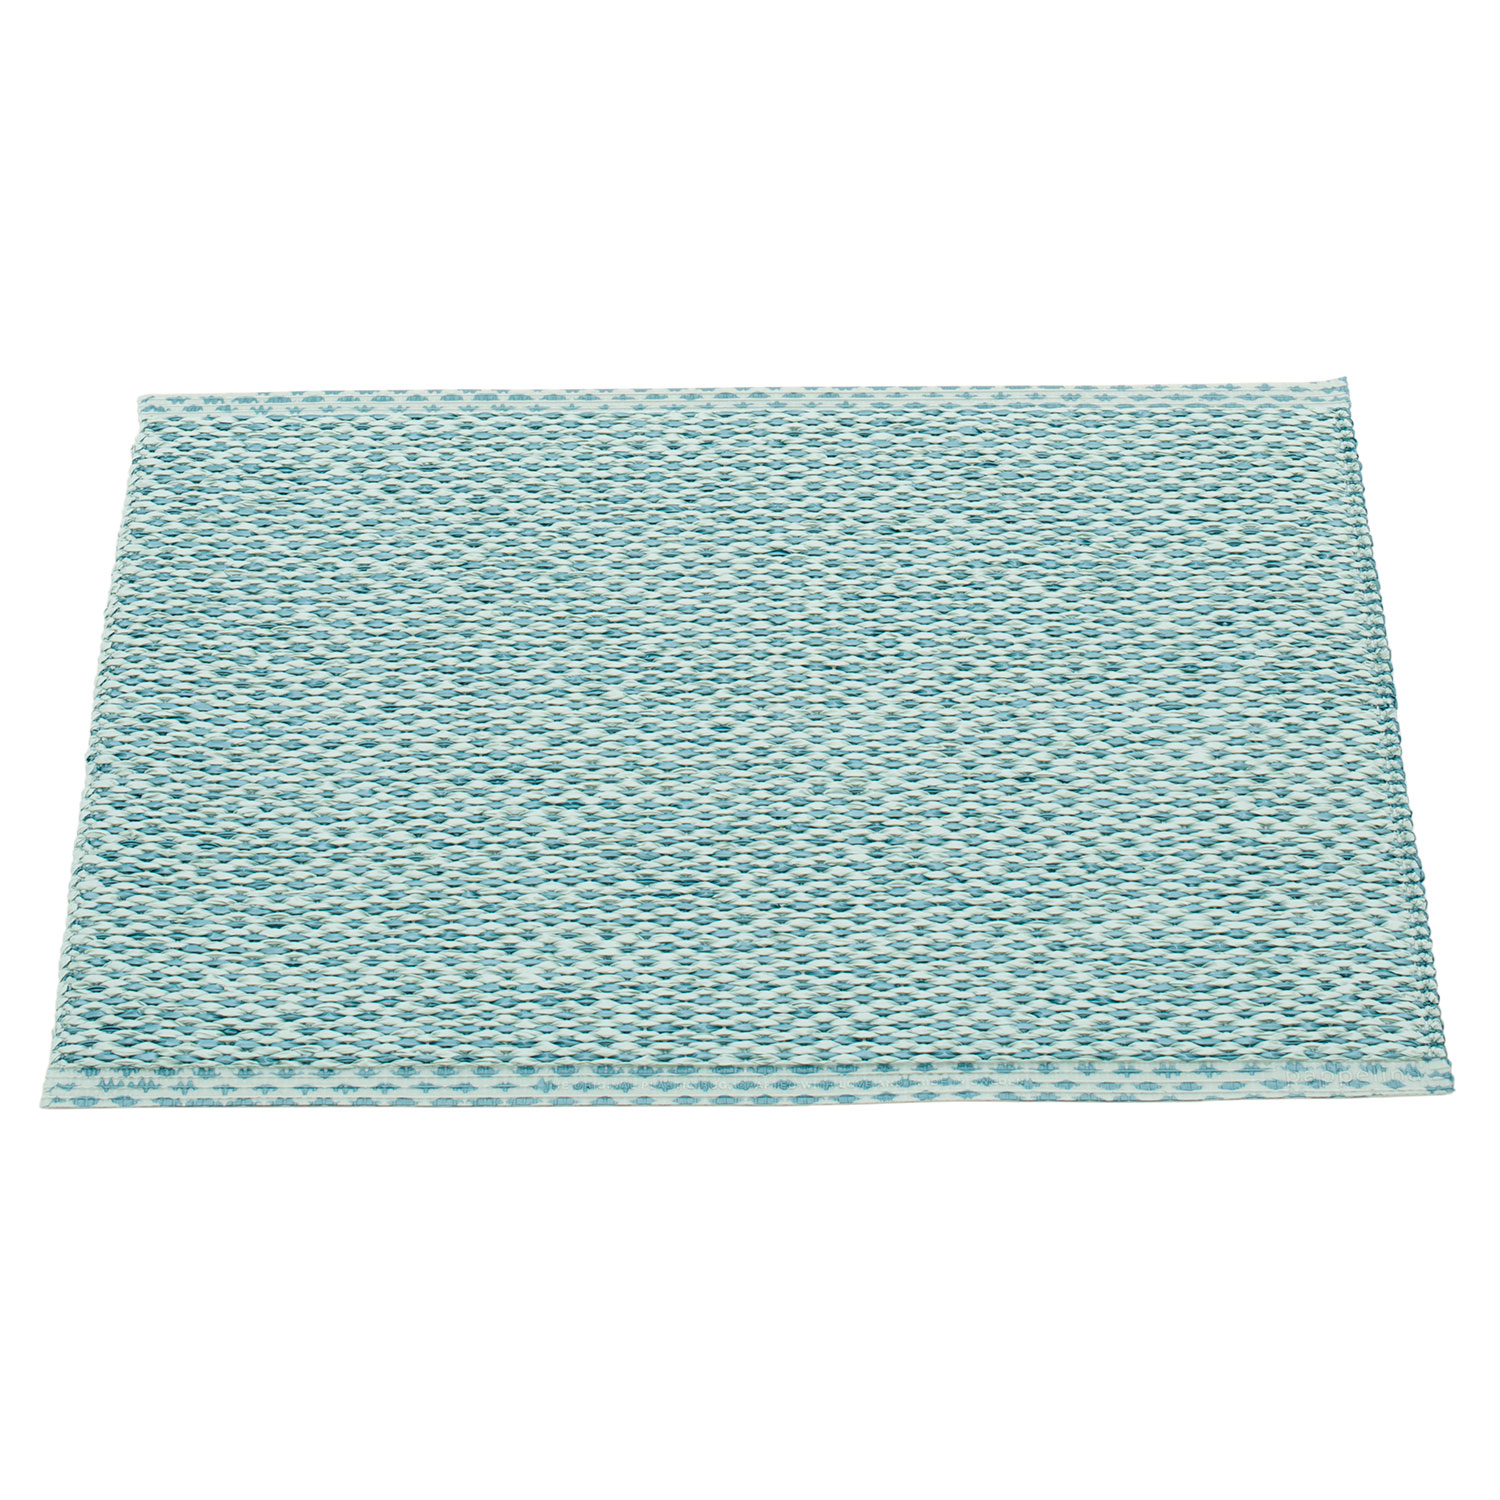 Pappelina Svea matta 70×50 cm azurblue metallic / pale turquoise